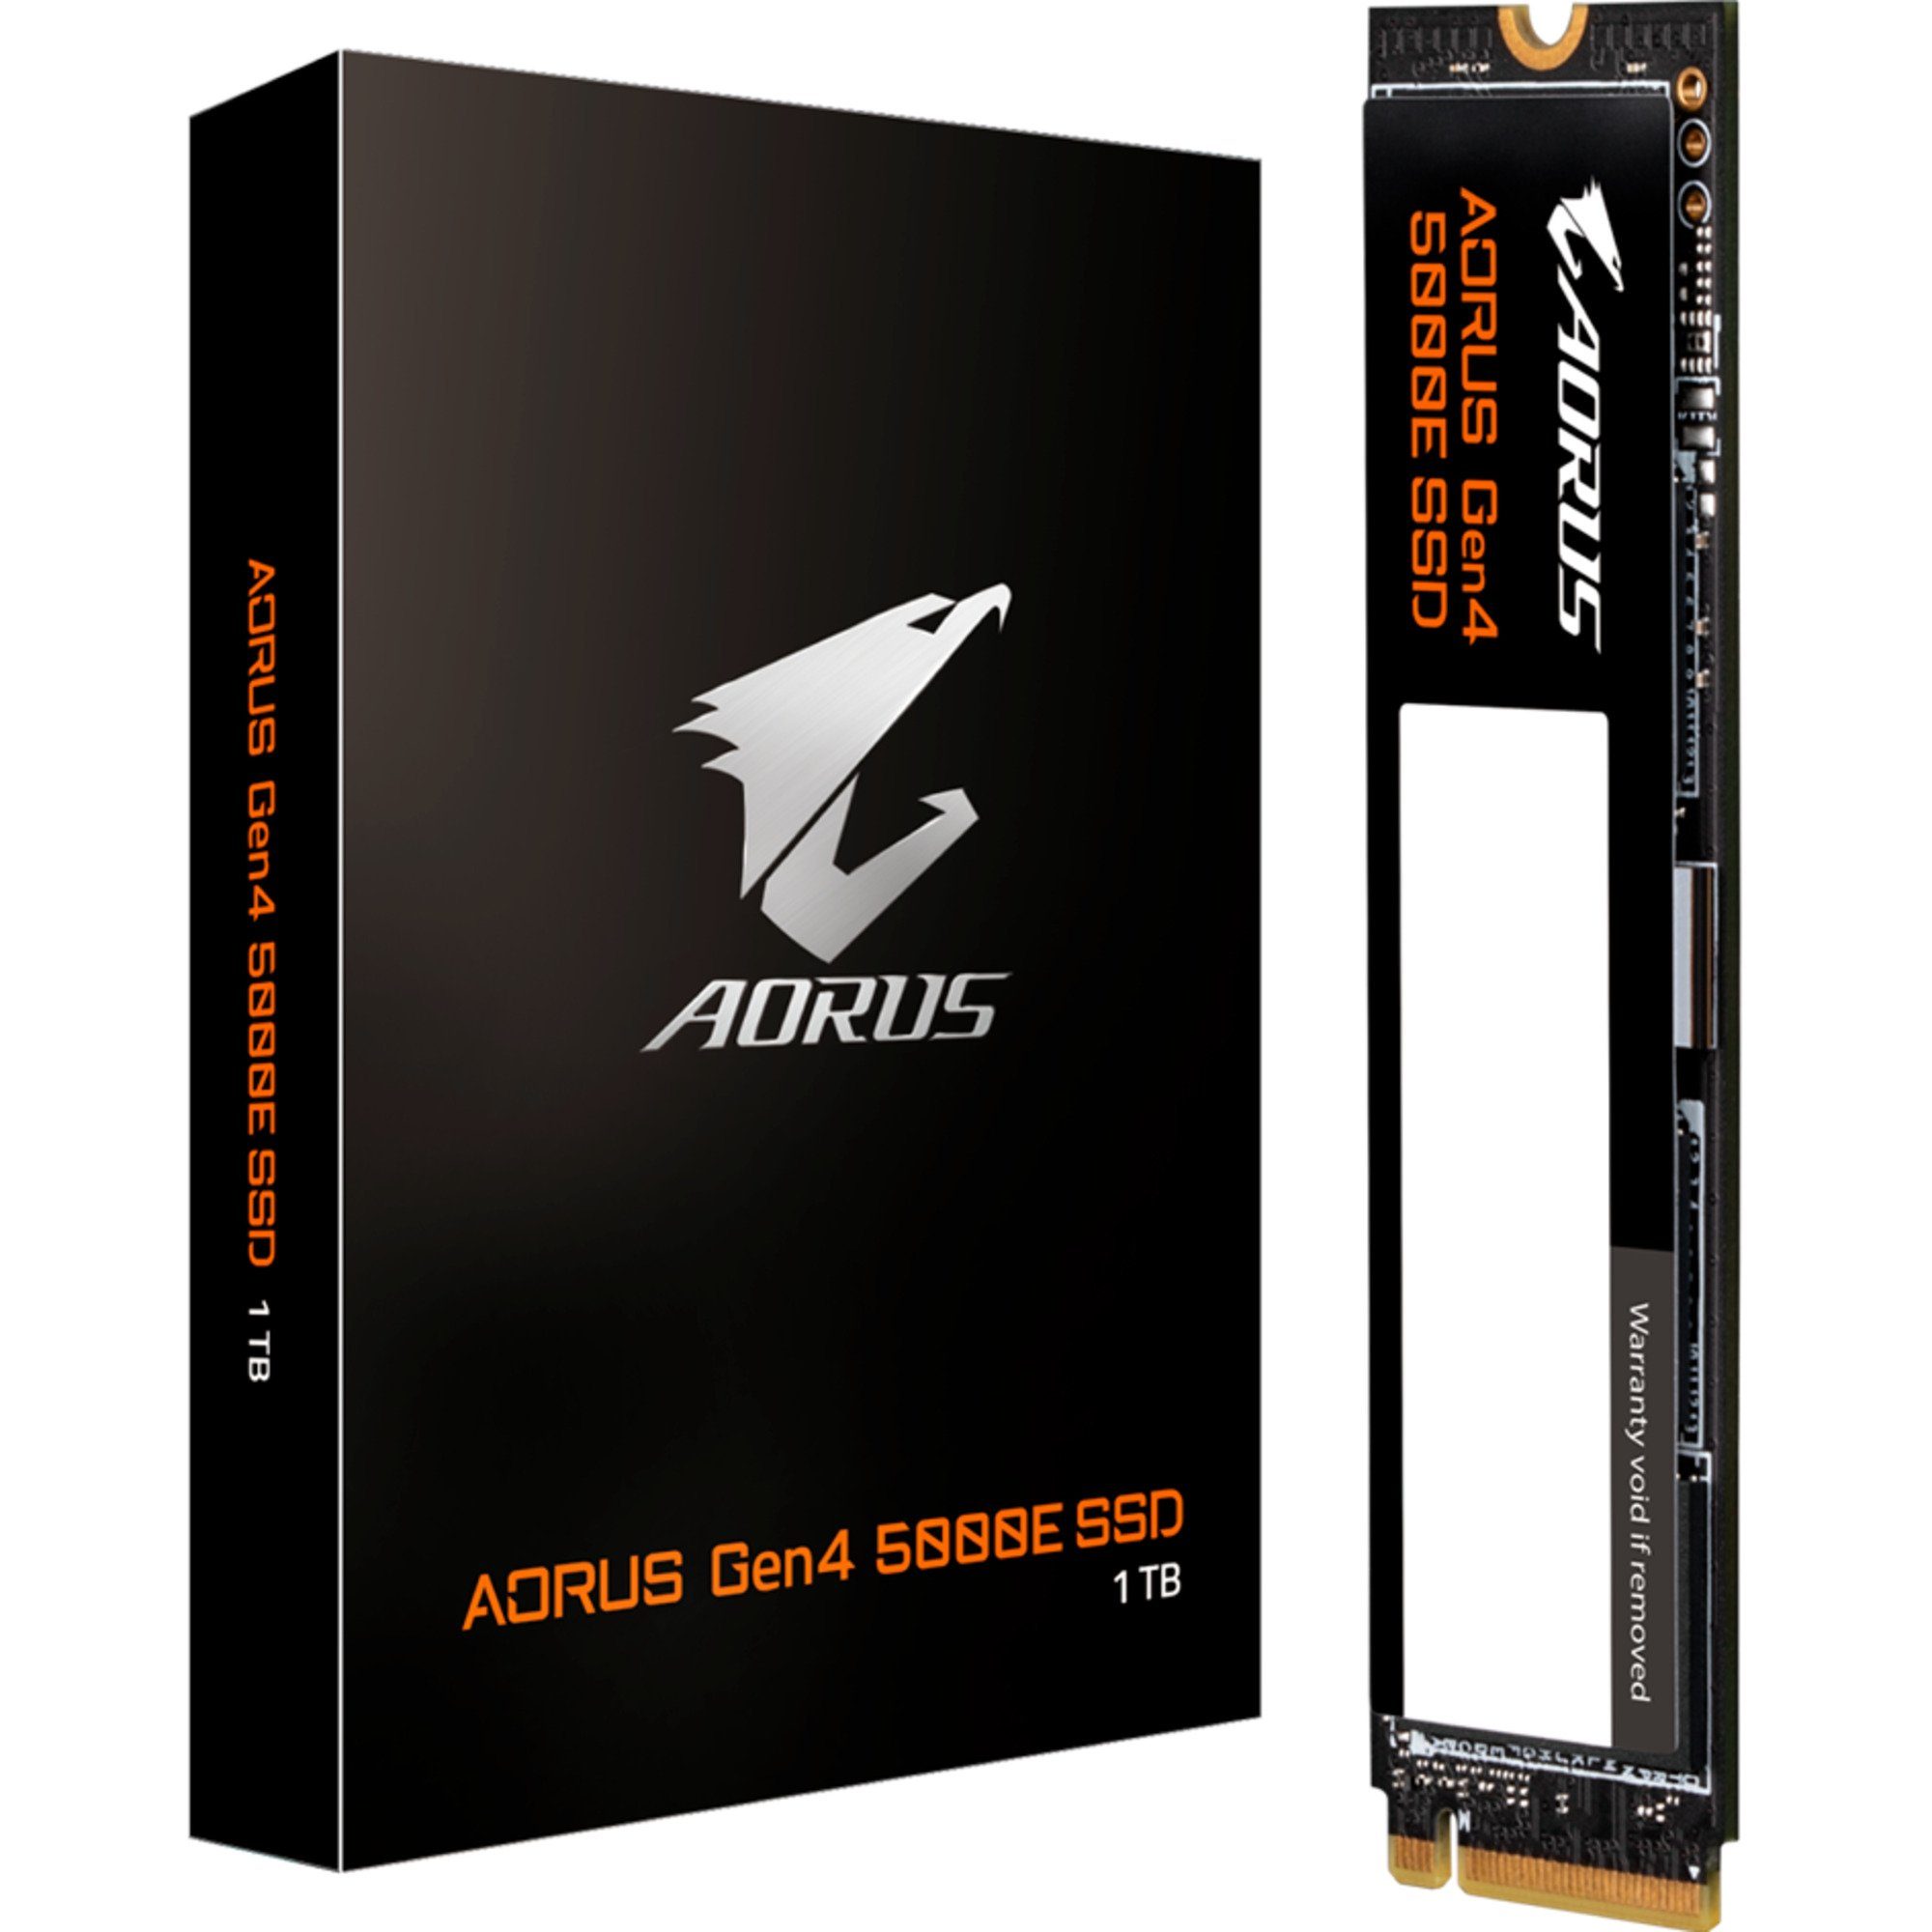 Gigabyte AORUS Gen4 5000E SSD 1 TB SSD-Festplatte (1 TB) Steckkarte"